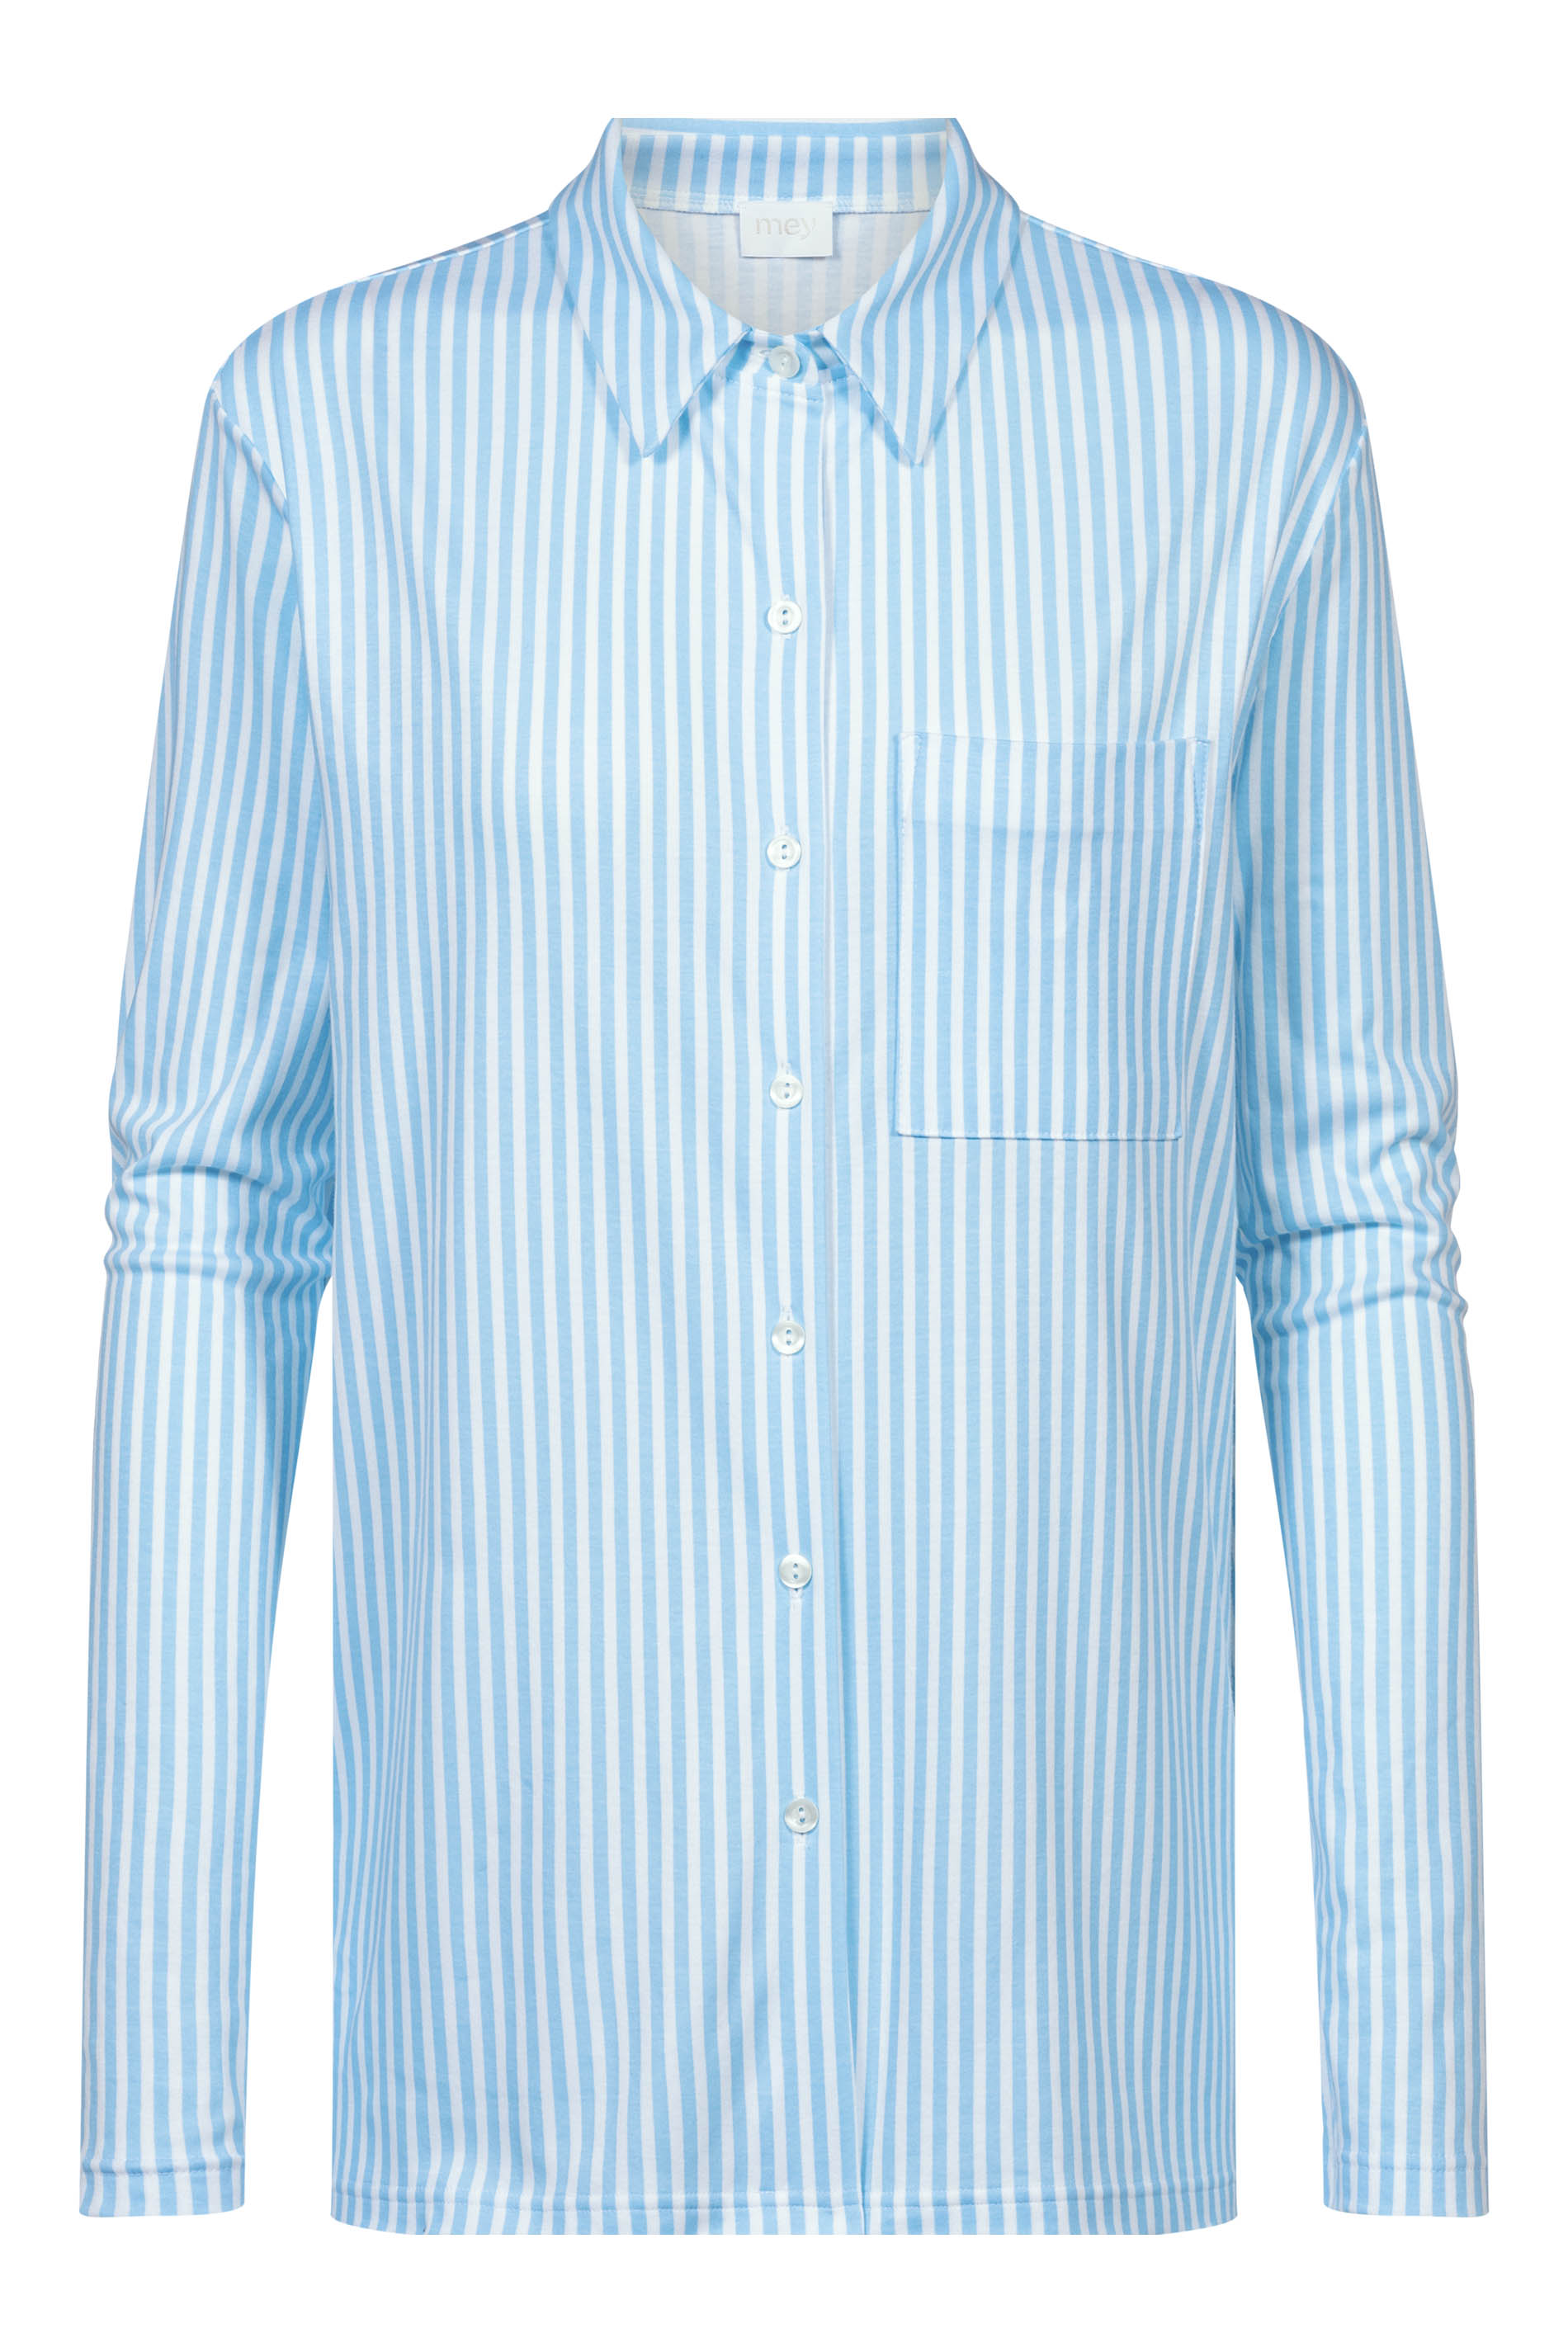 Pyjama shirt Dream Blue Serie Sleepsation Cut Out | mey®